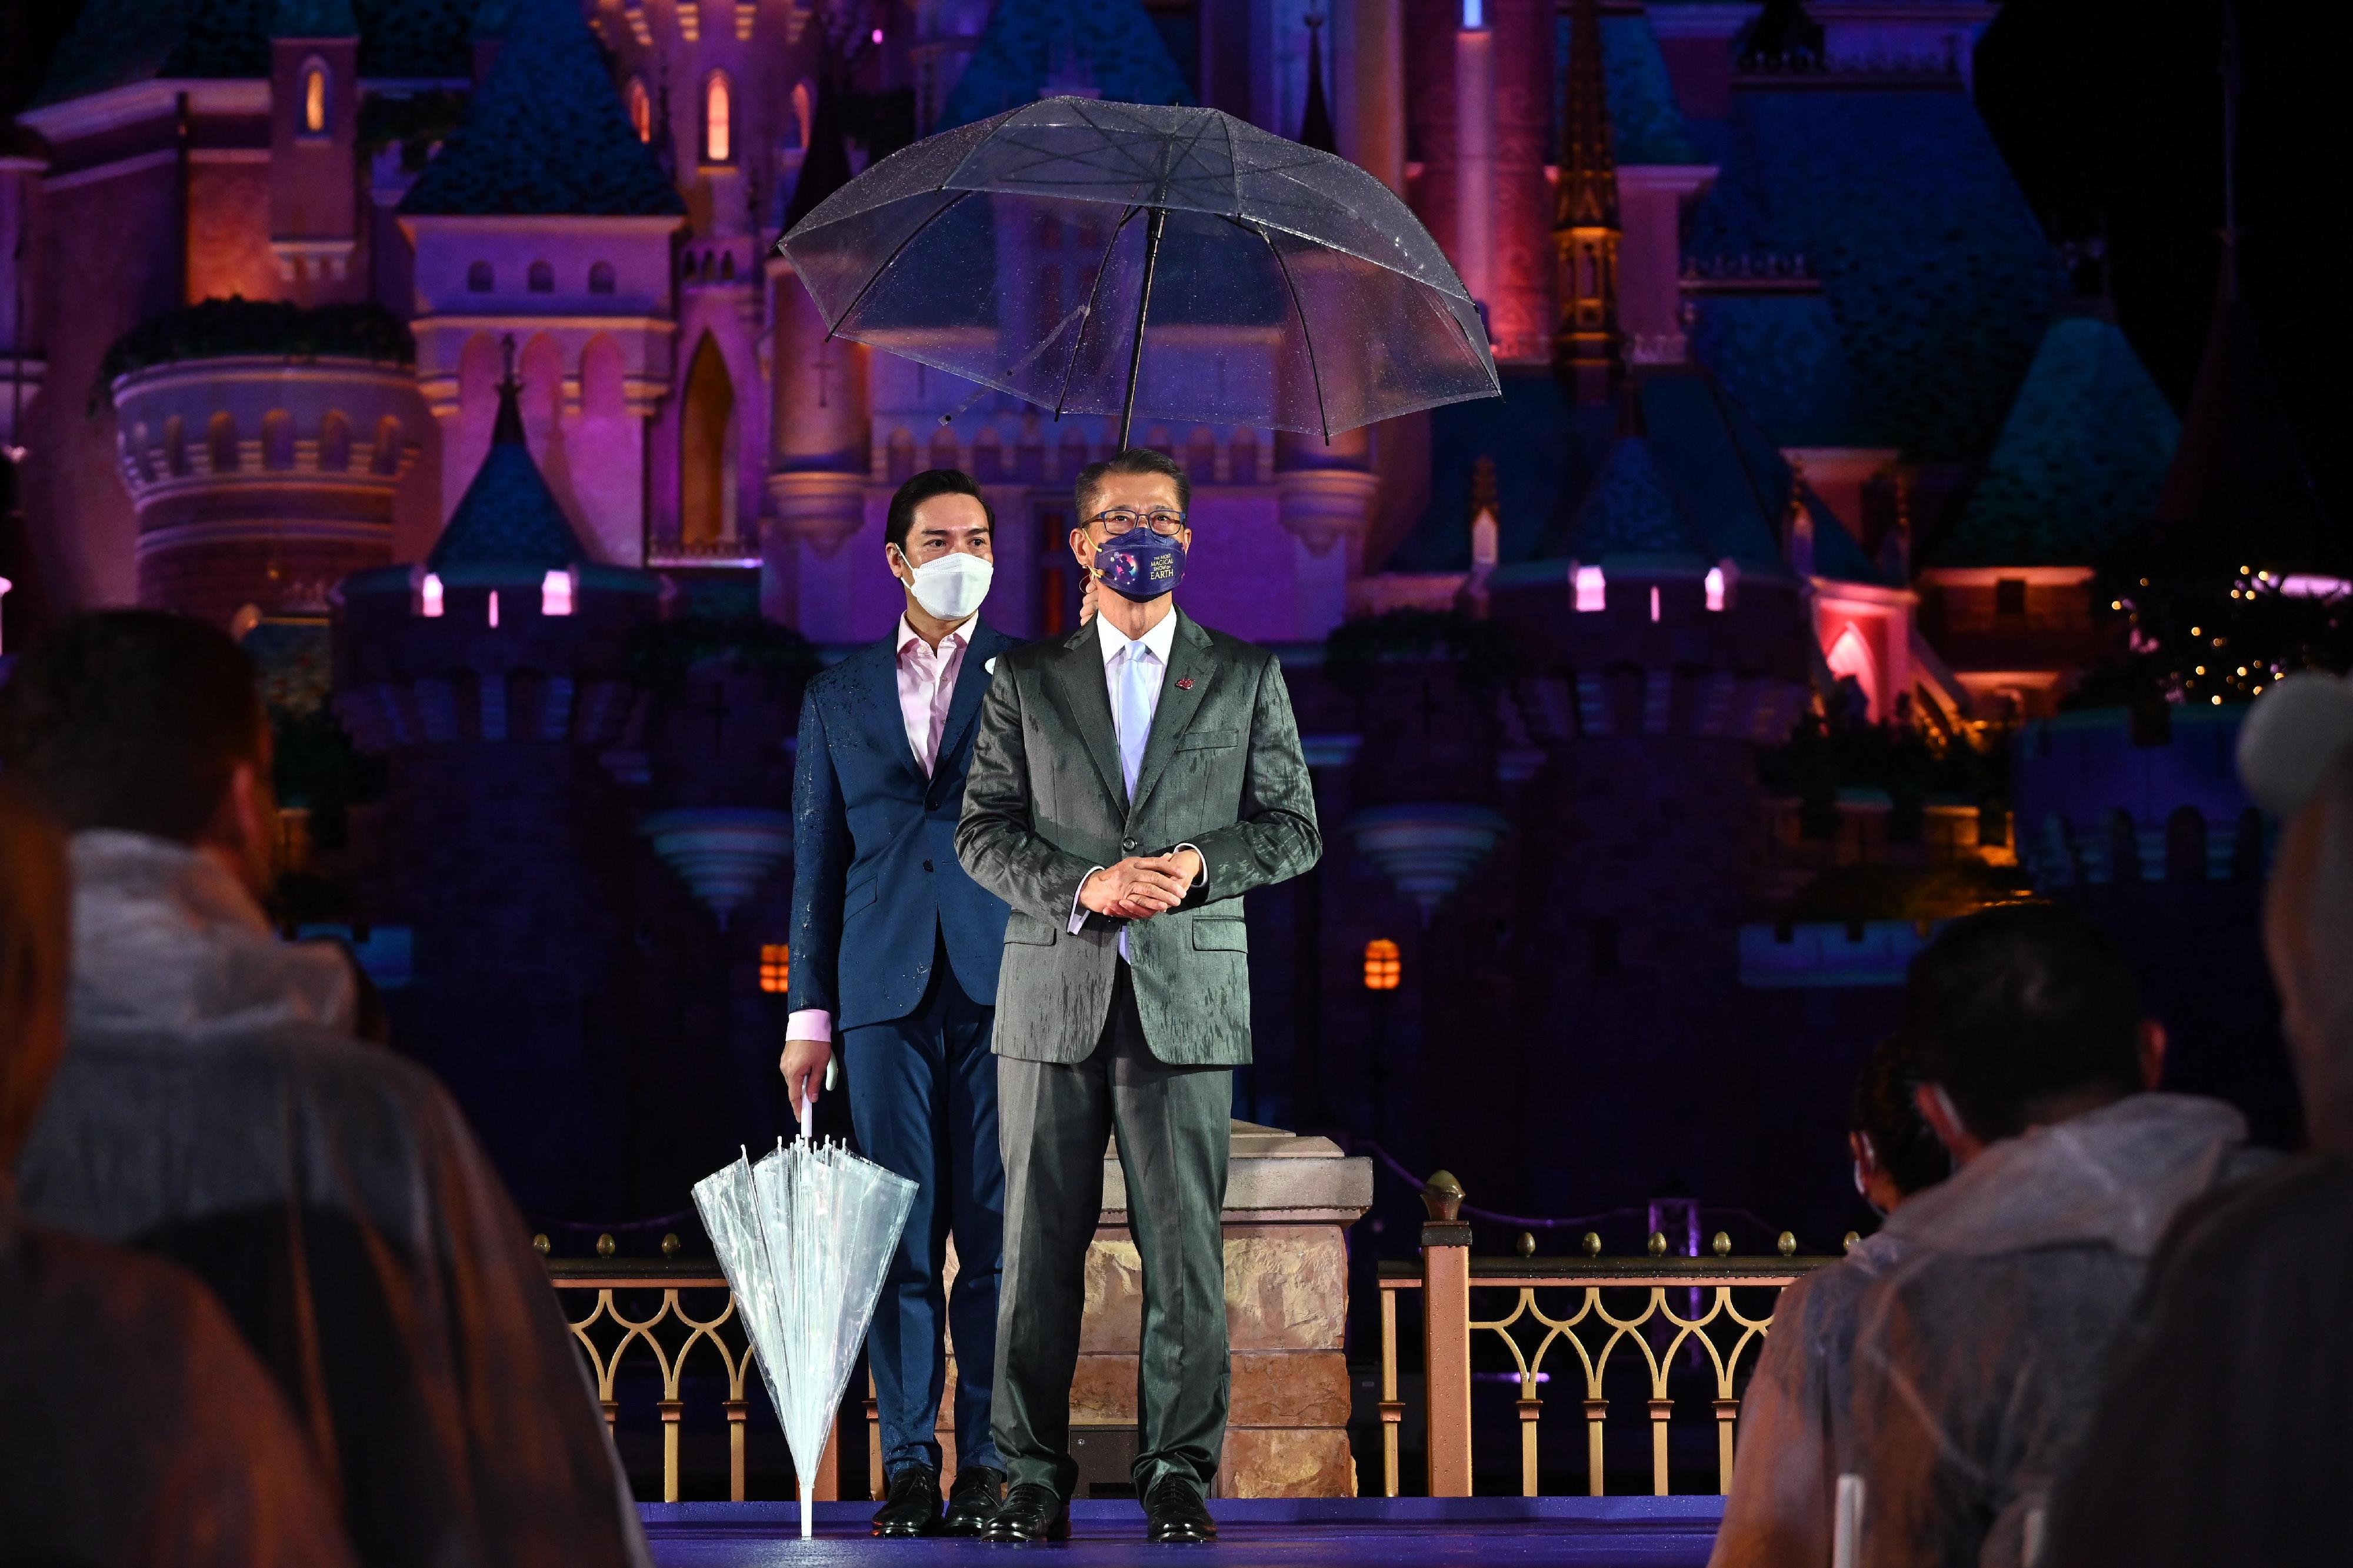 The Financial Secretary, Mr Paul Chan, speaks at the Hong Kong Disneyland - "Momentous" Premiere today (June 14).